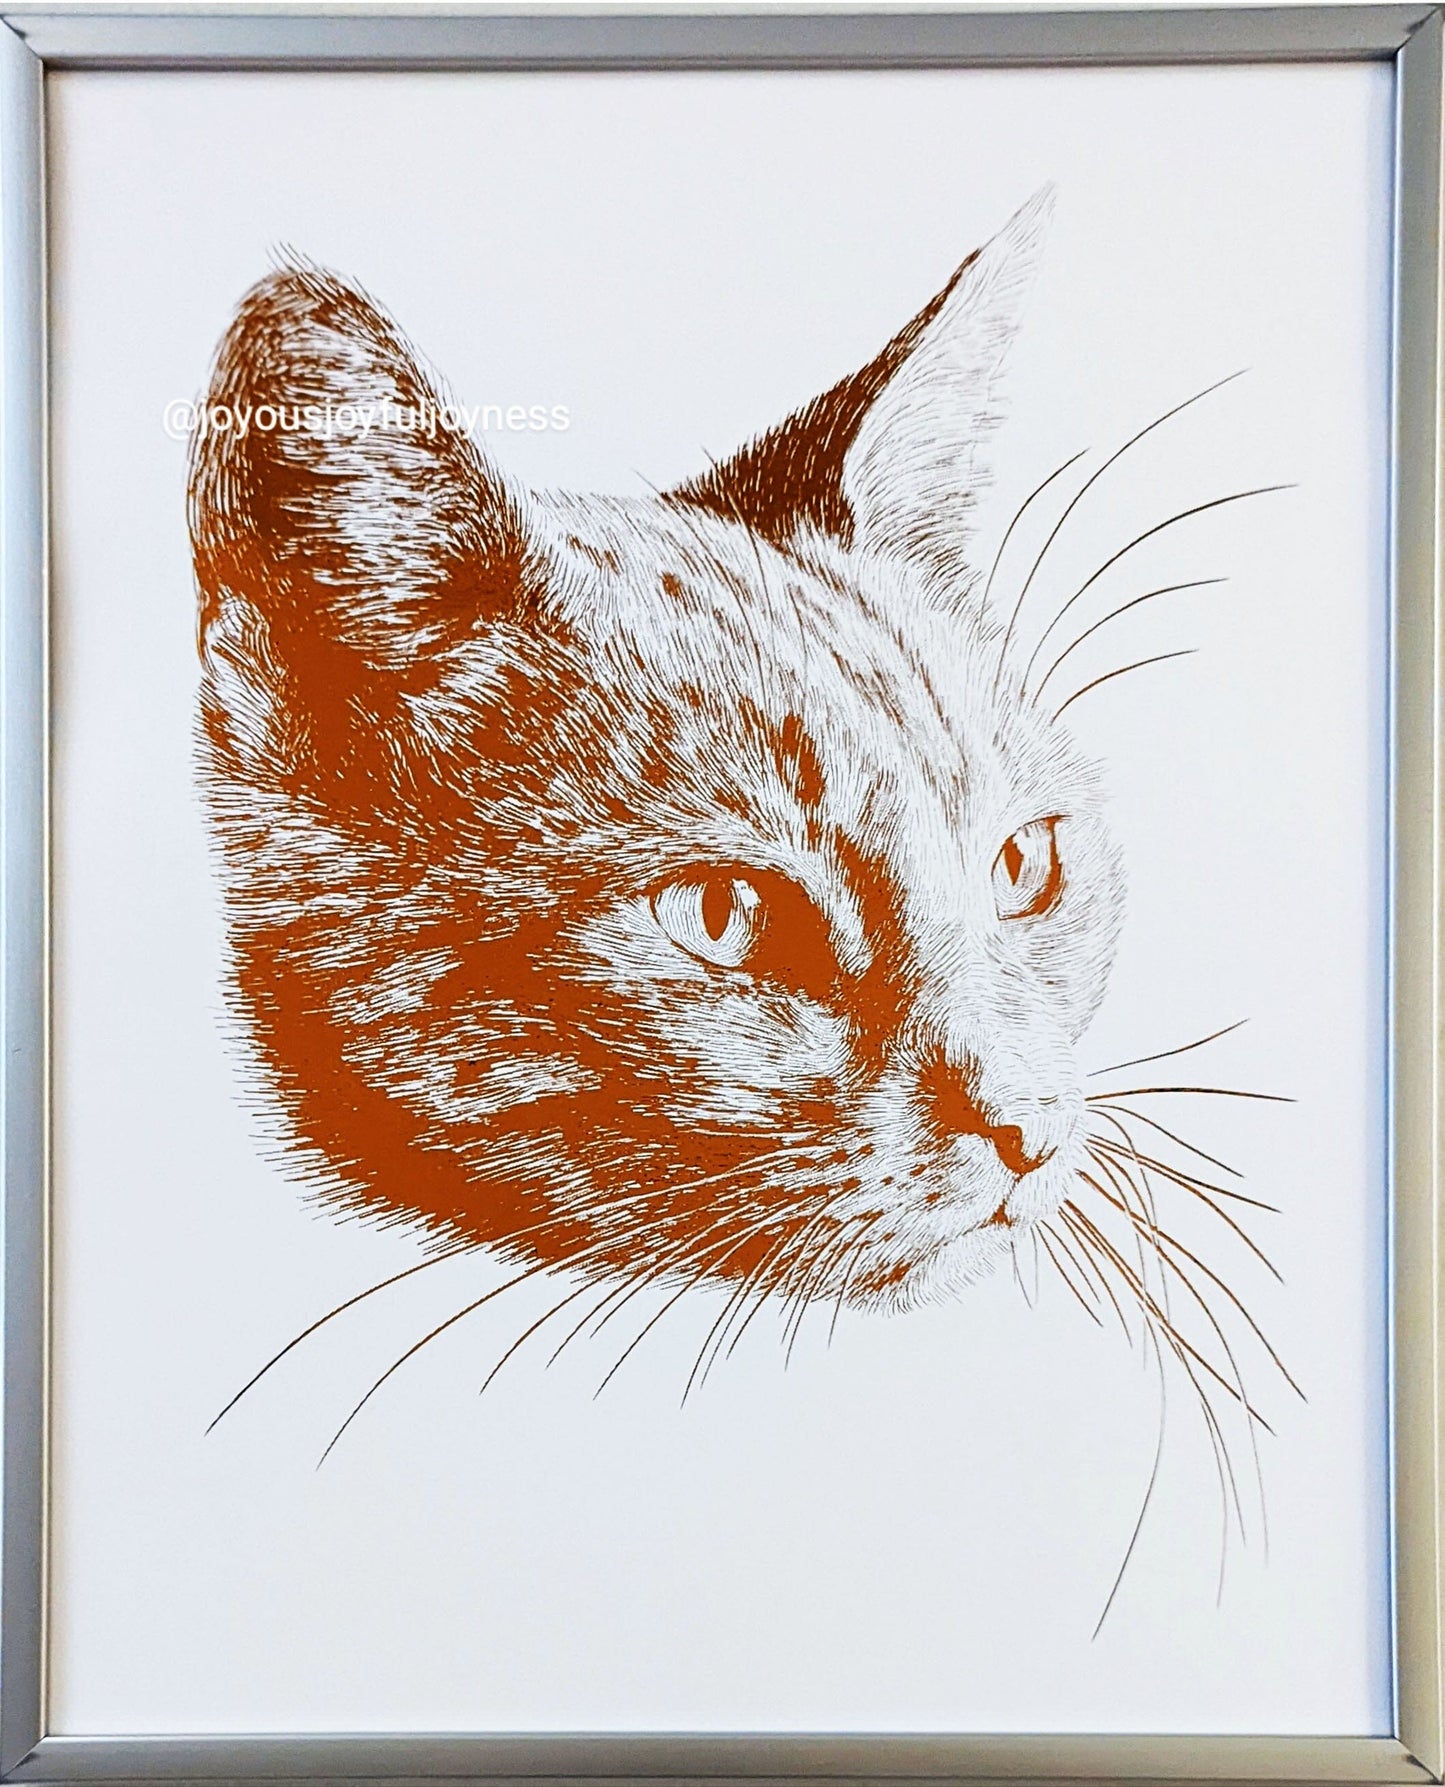 Custom Portrait Of Cats Posters, Prints, & Visual Artwork JoyousJoyfulJoyness 